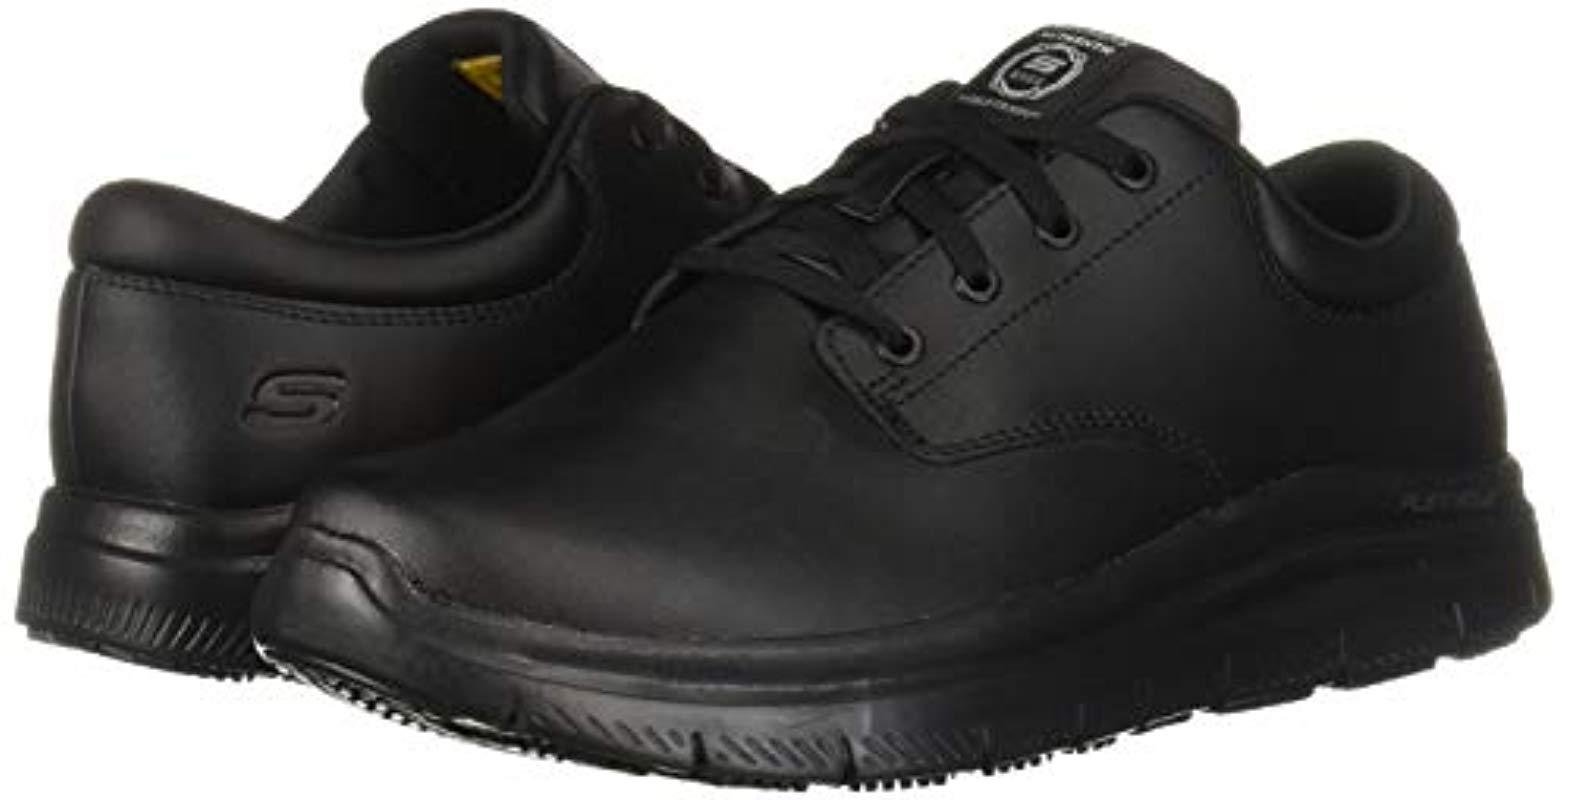 Skechers Leather Flex Advantage Sr Fourche Food Service Shoe in Black ...